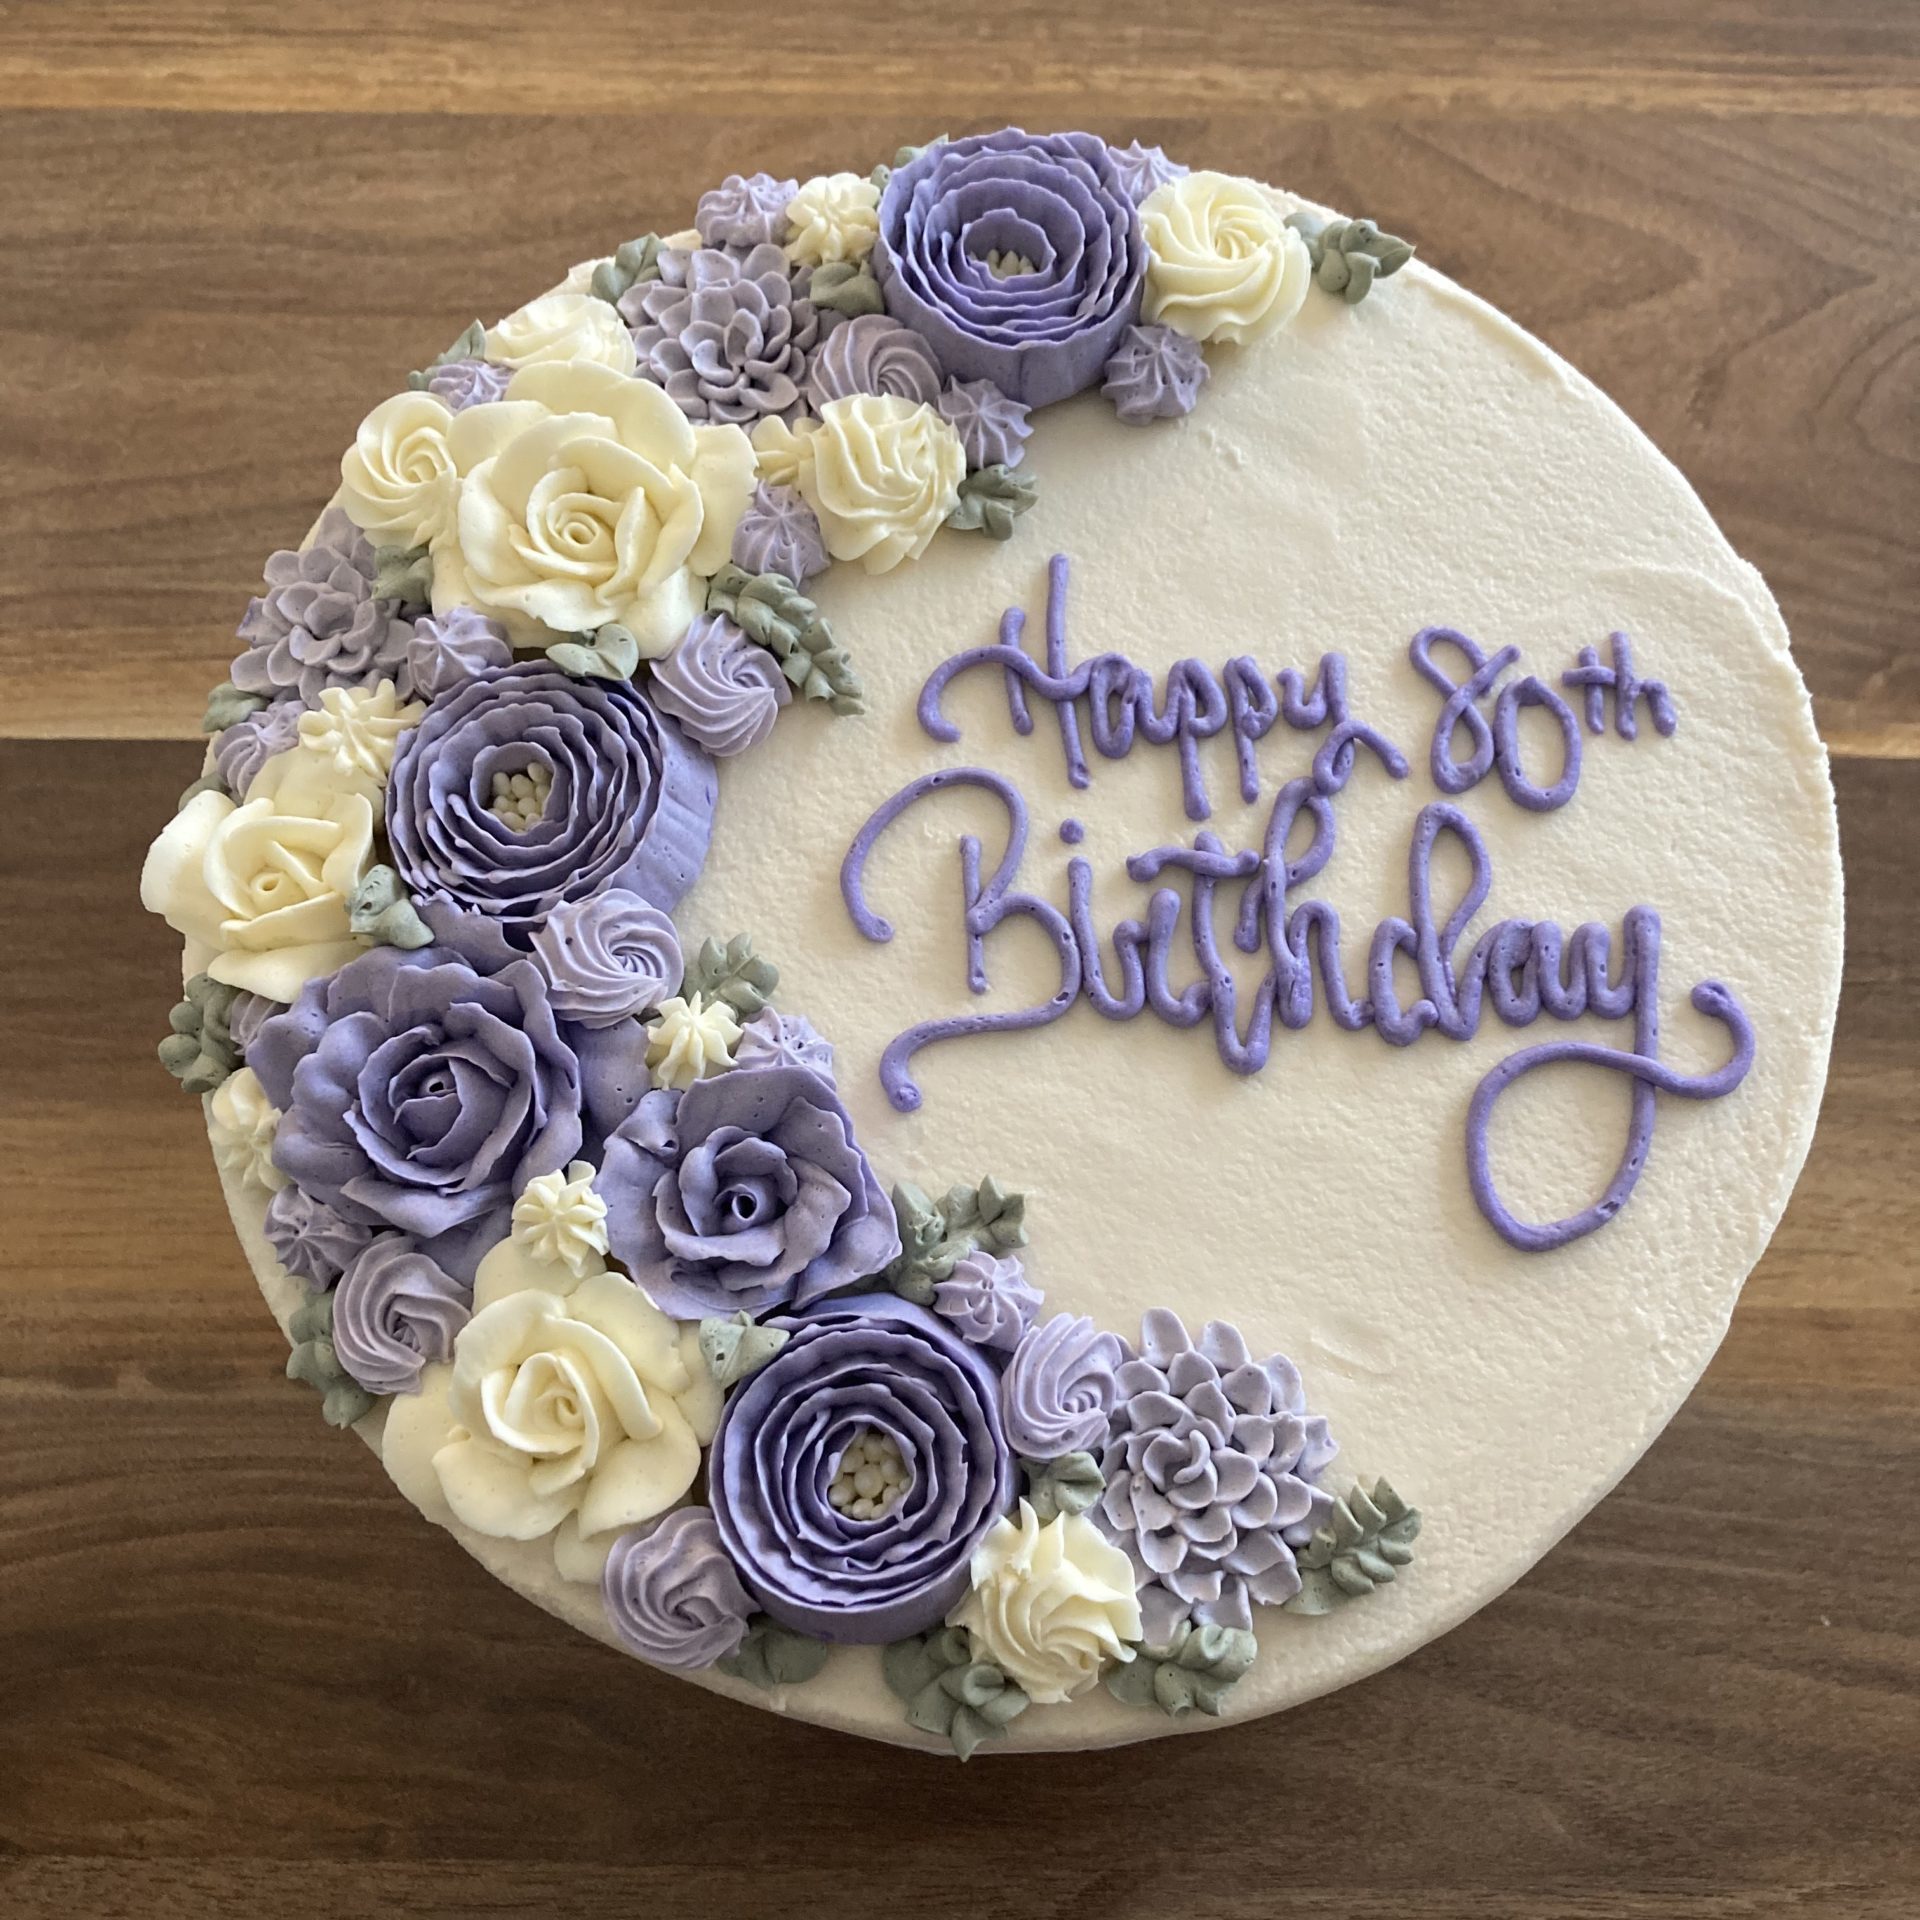 Happy birthday purple cake